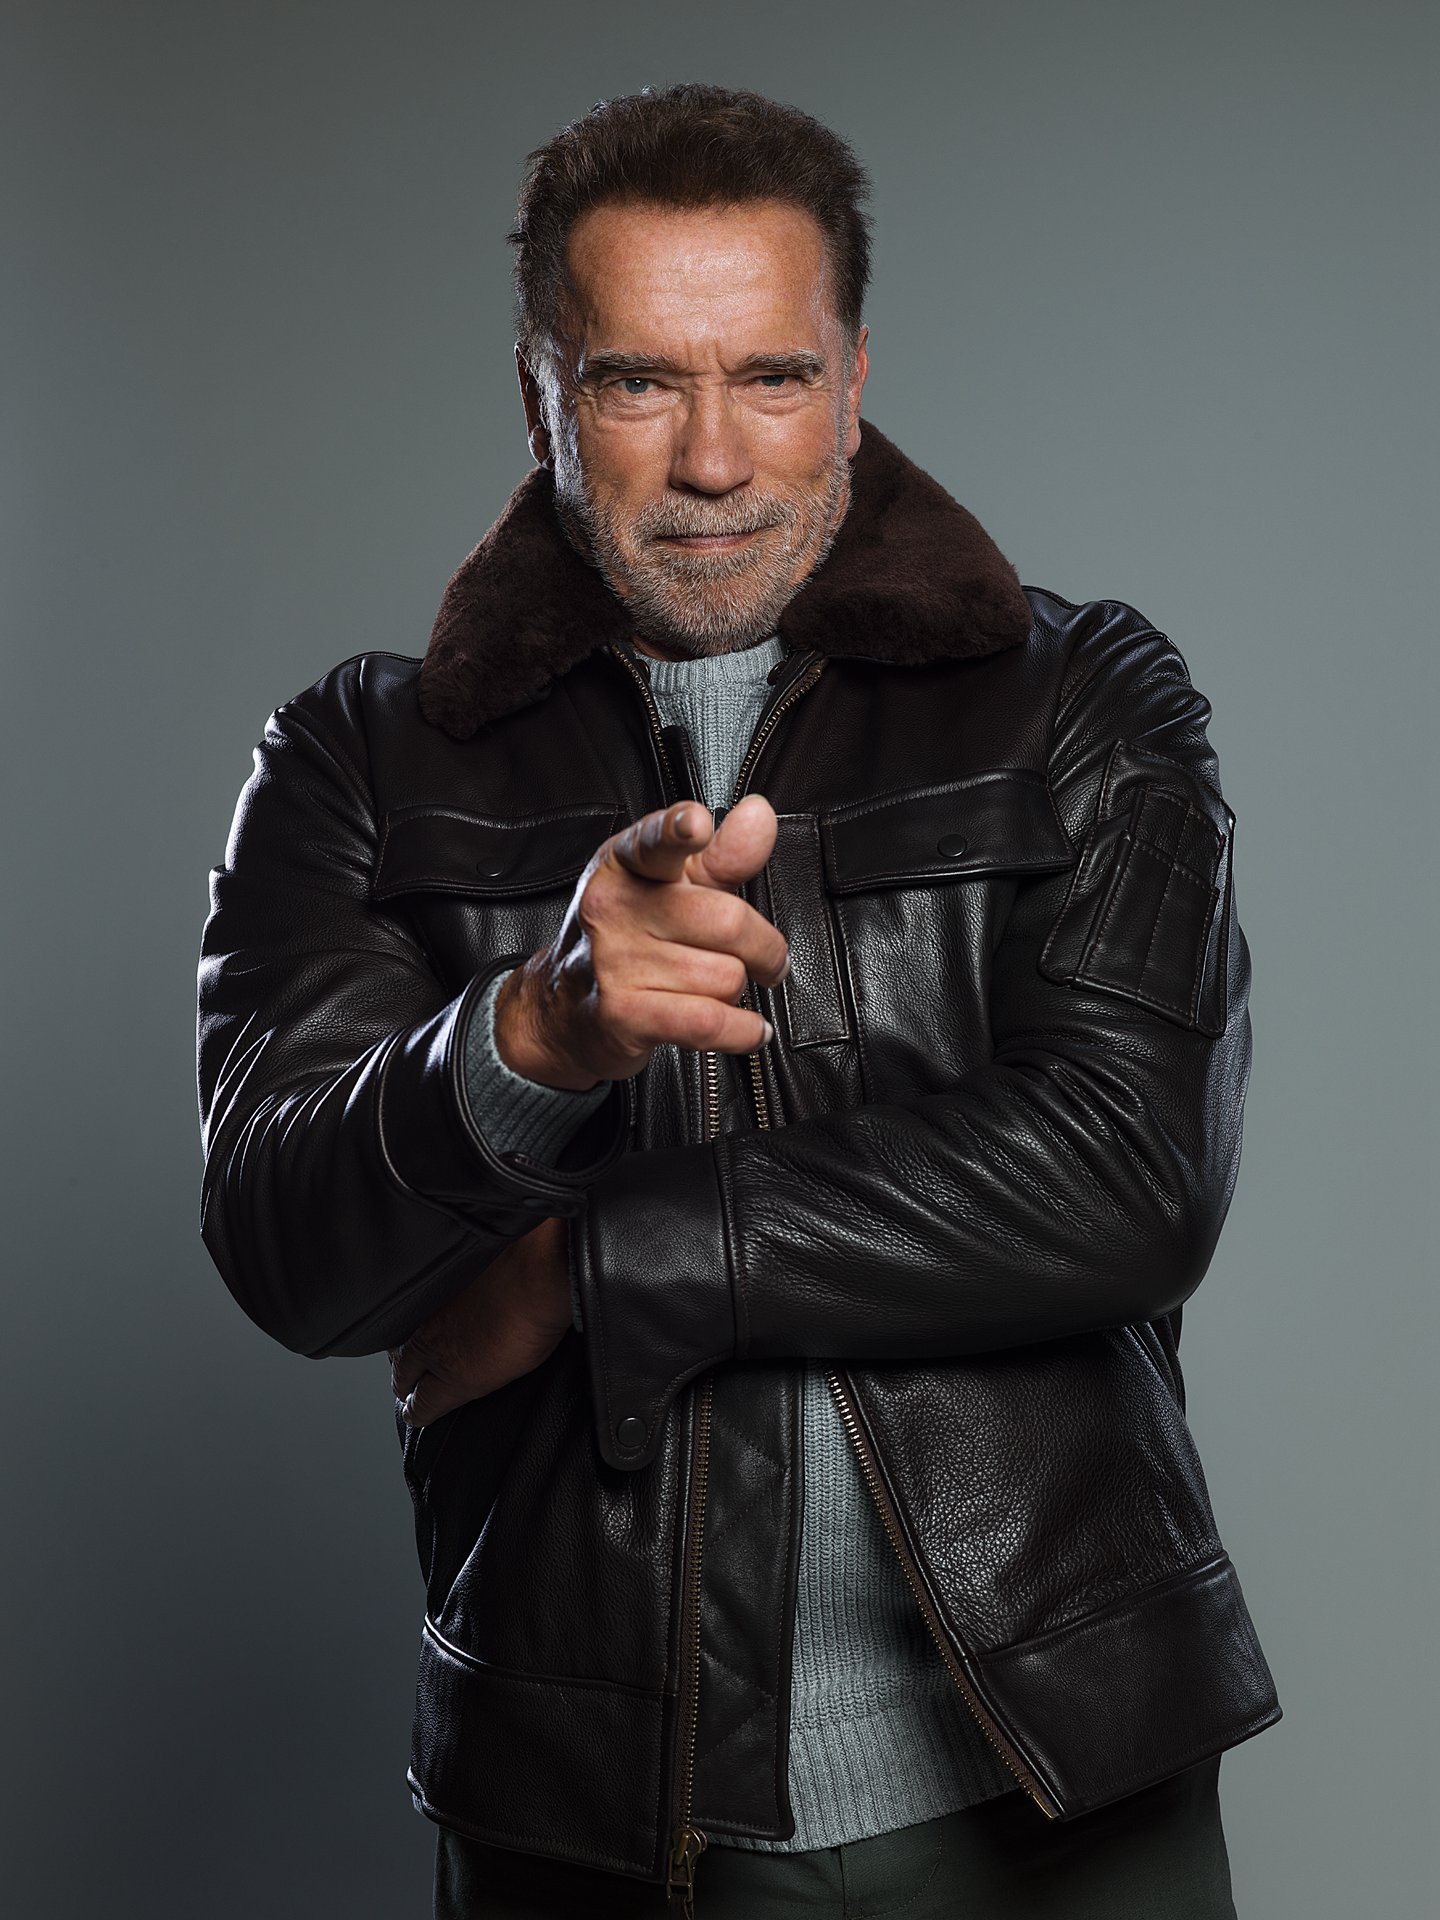 Arnold_Schwarzenegger_photo